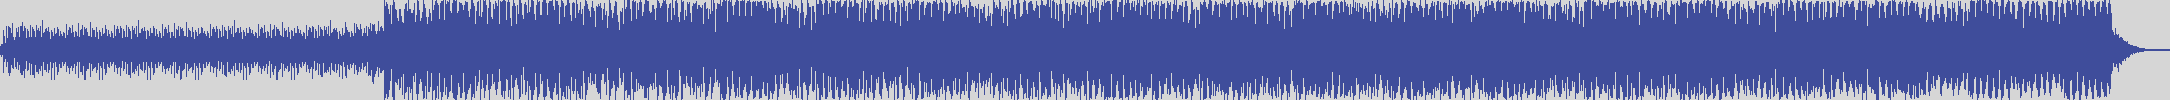 vitti_records [VIT020] Slow Cam - Natural Flies [Original Mix] audio wave form